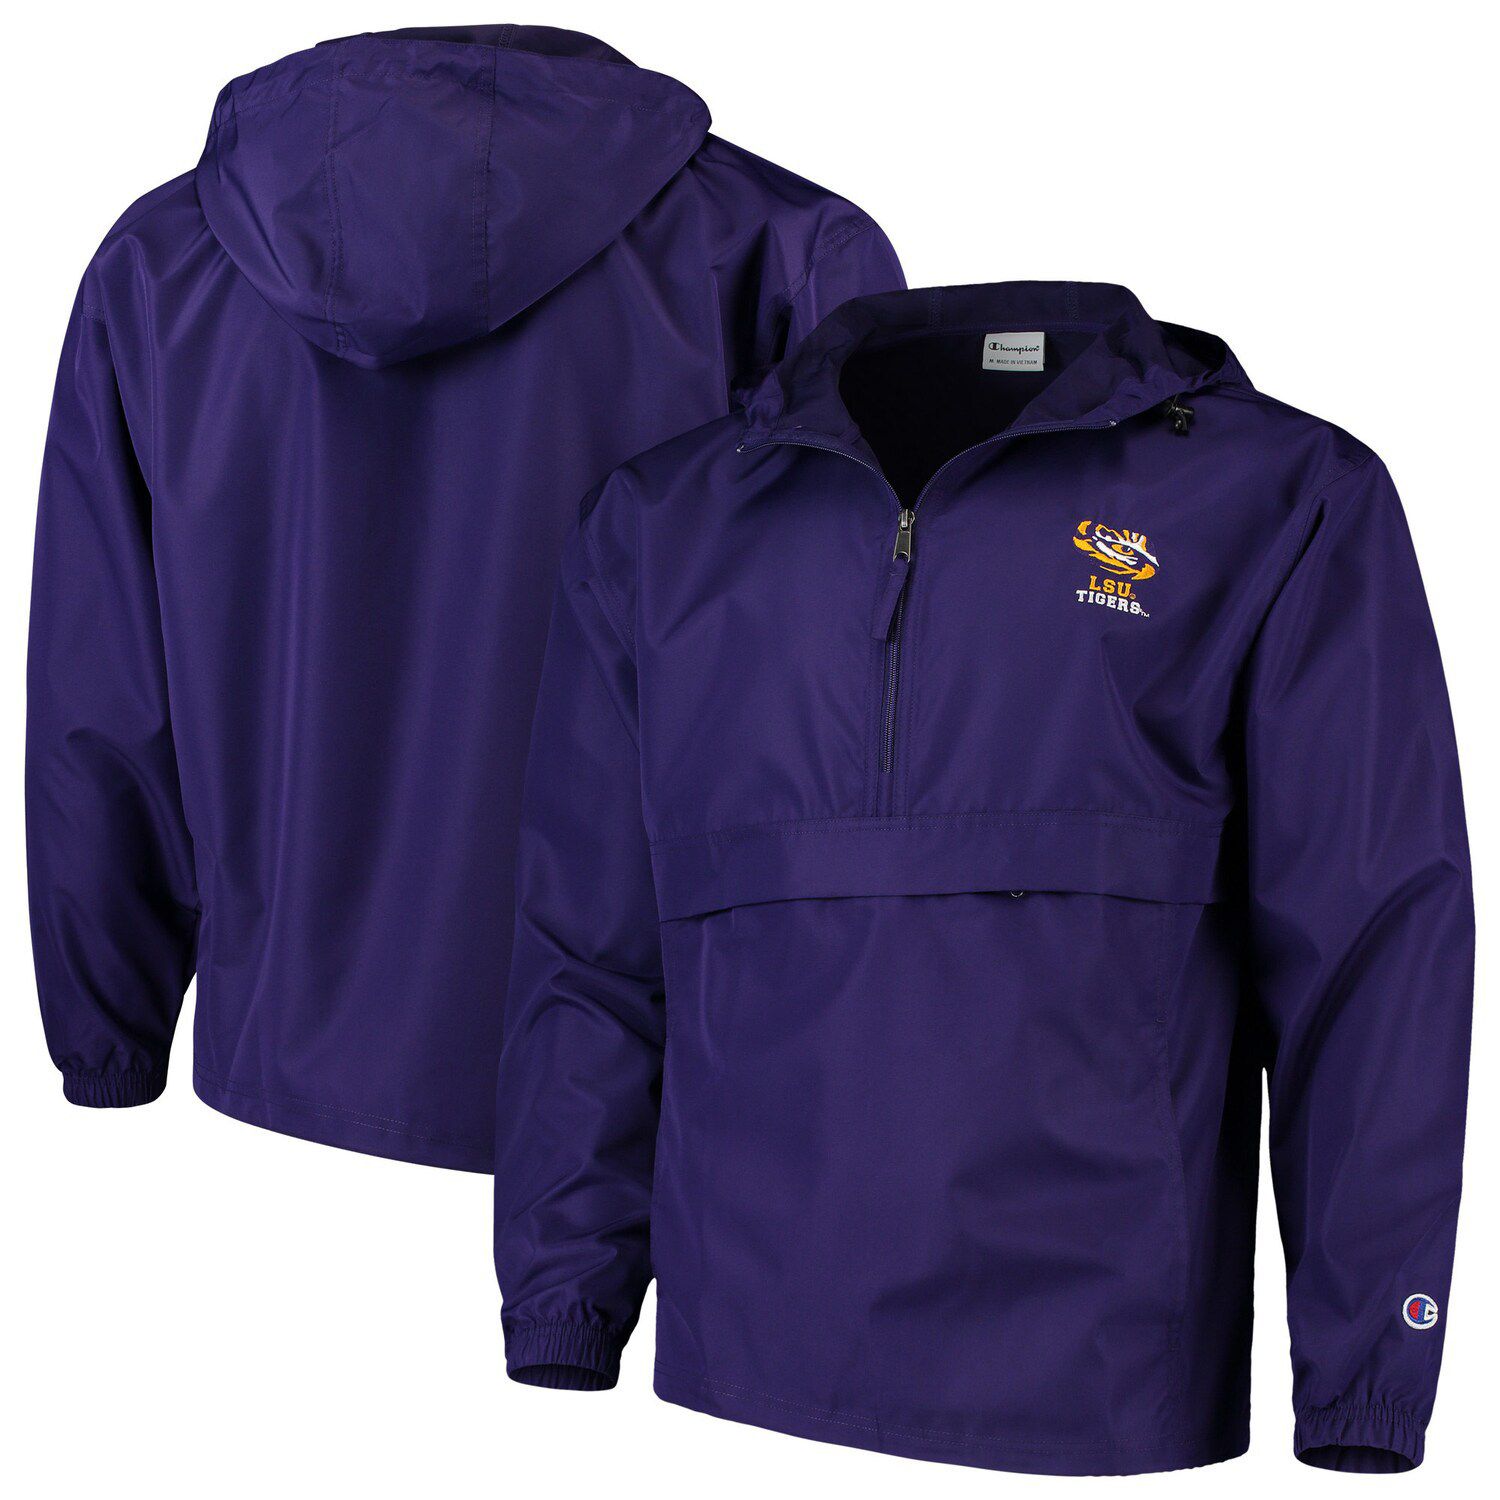 champion jacket mens purple